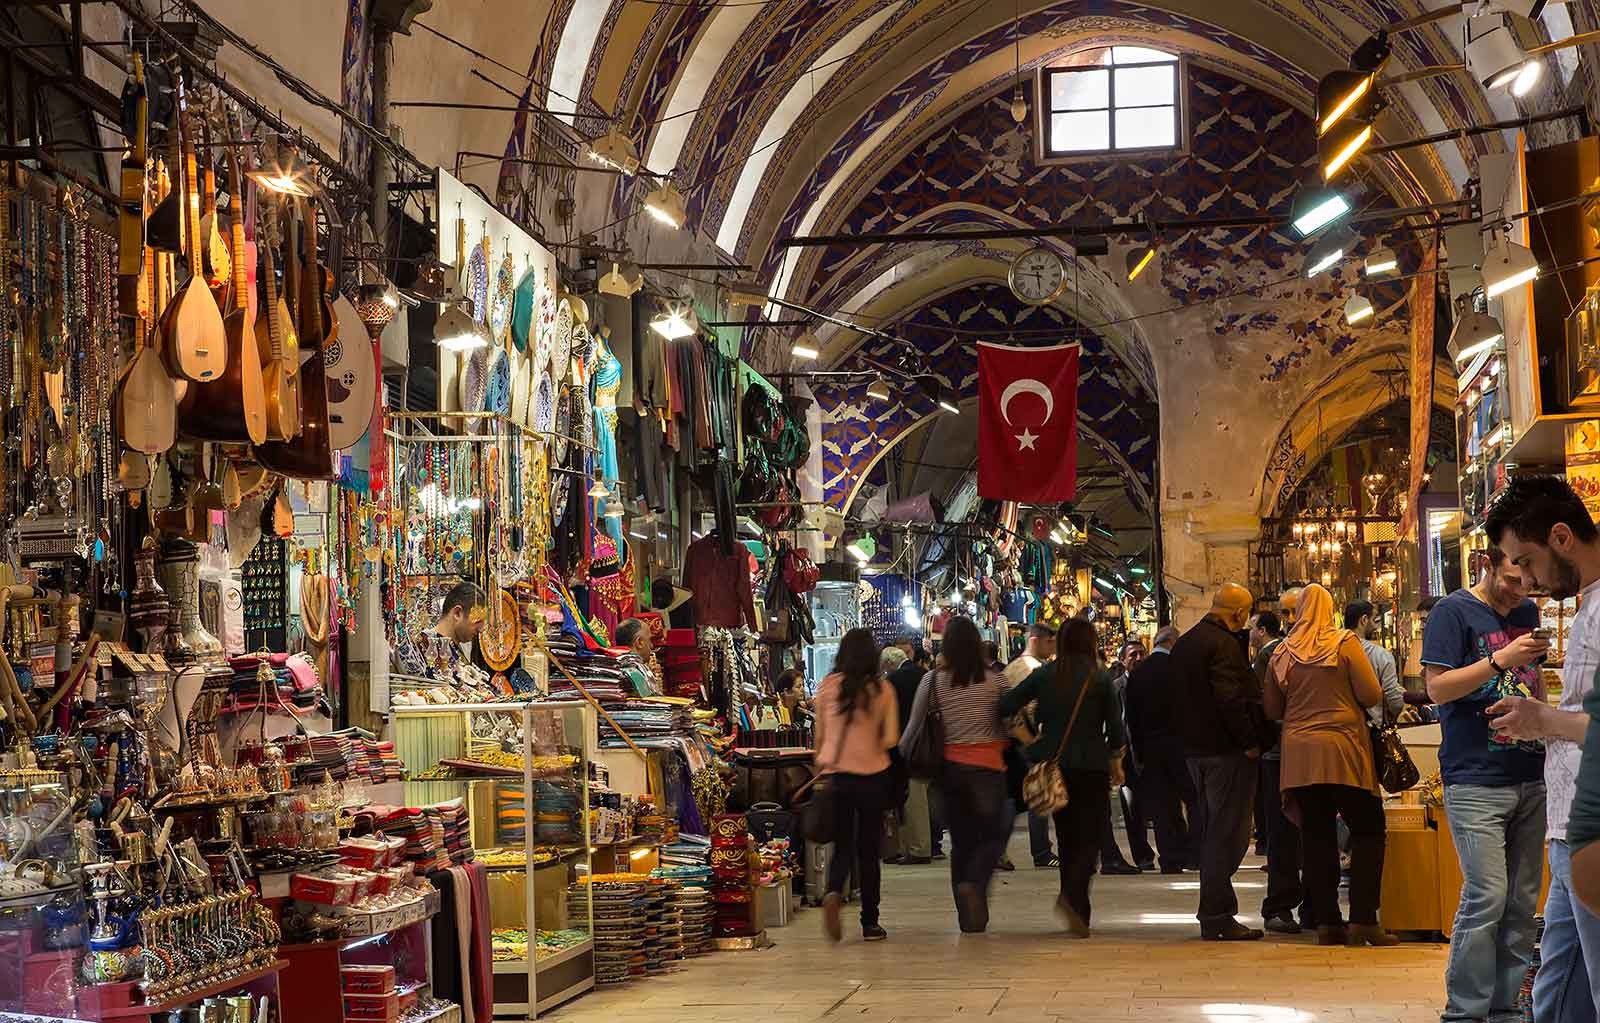 Inside View of Istanbul Grand Bazaar